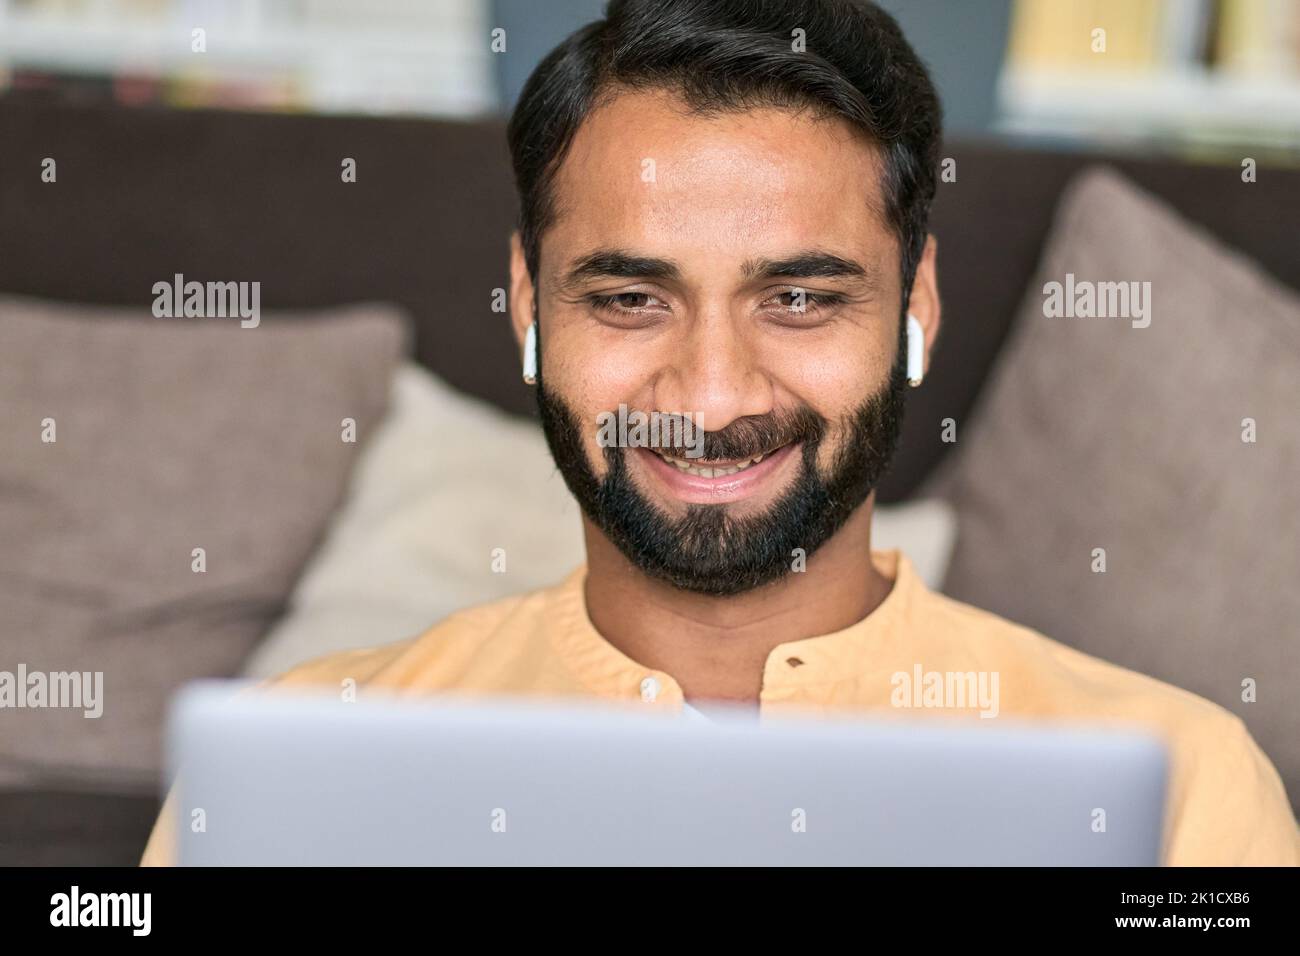 Smiling indian man sitting at home wearing earphones using laptop computer. Stock Photo